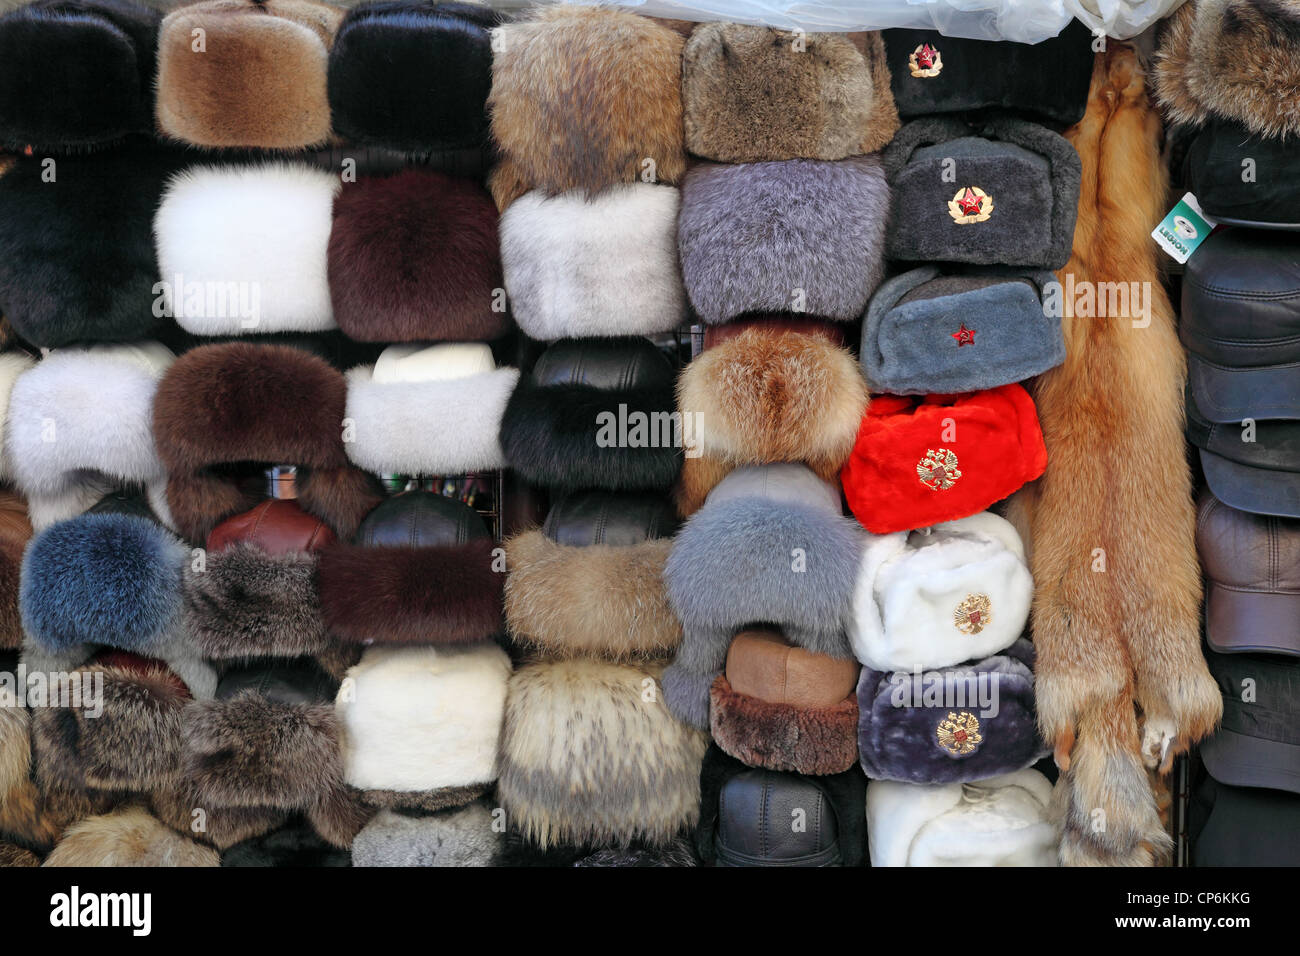 Ushanka traditional Russian warm hat Stock Photo